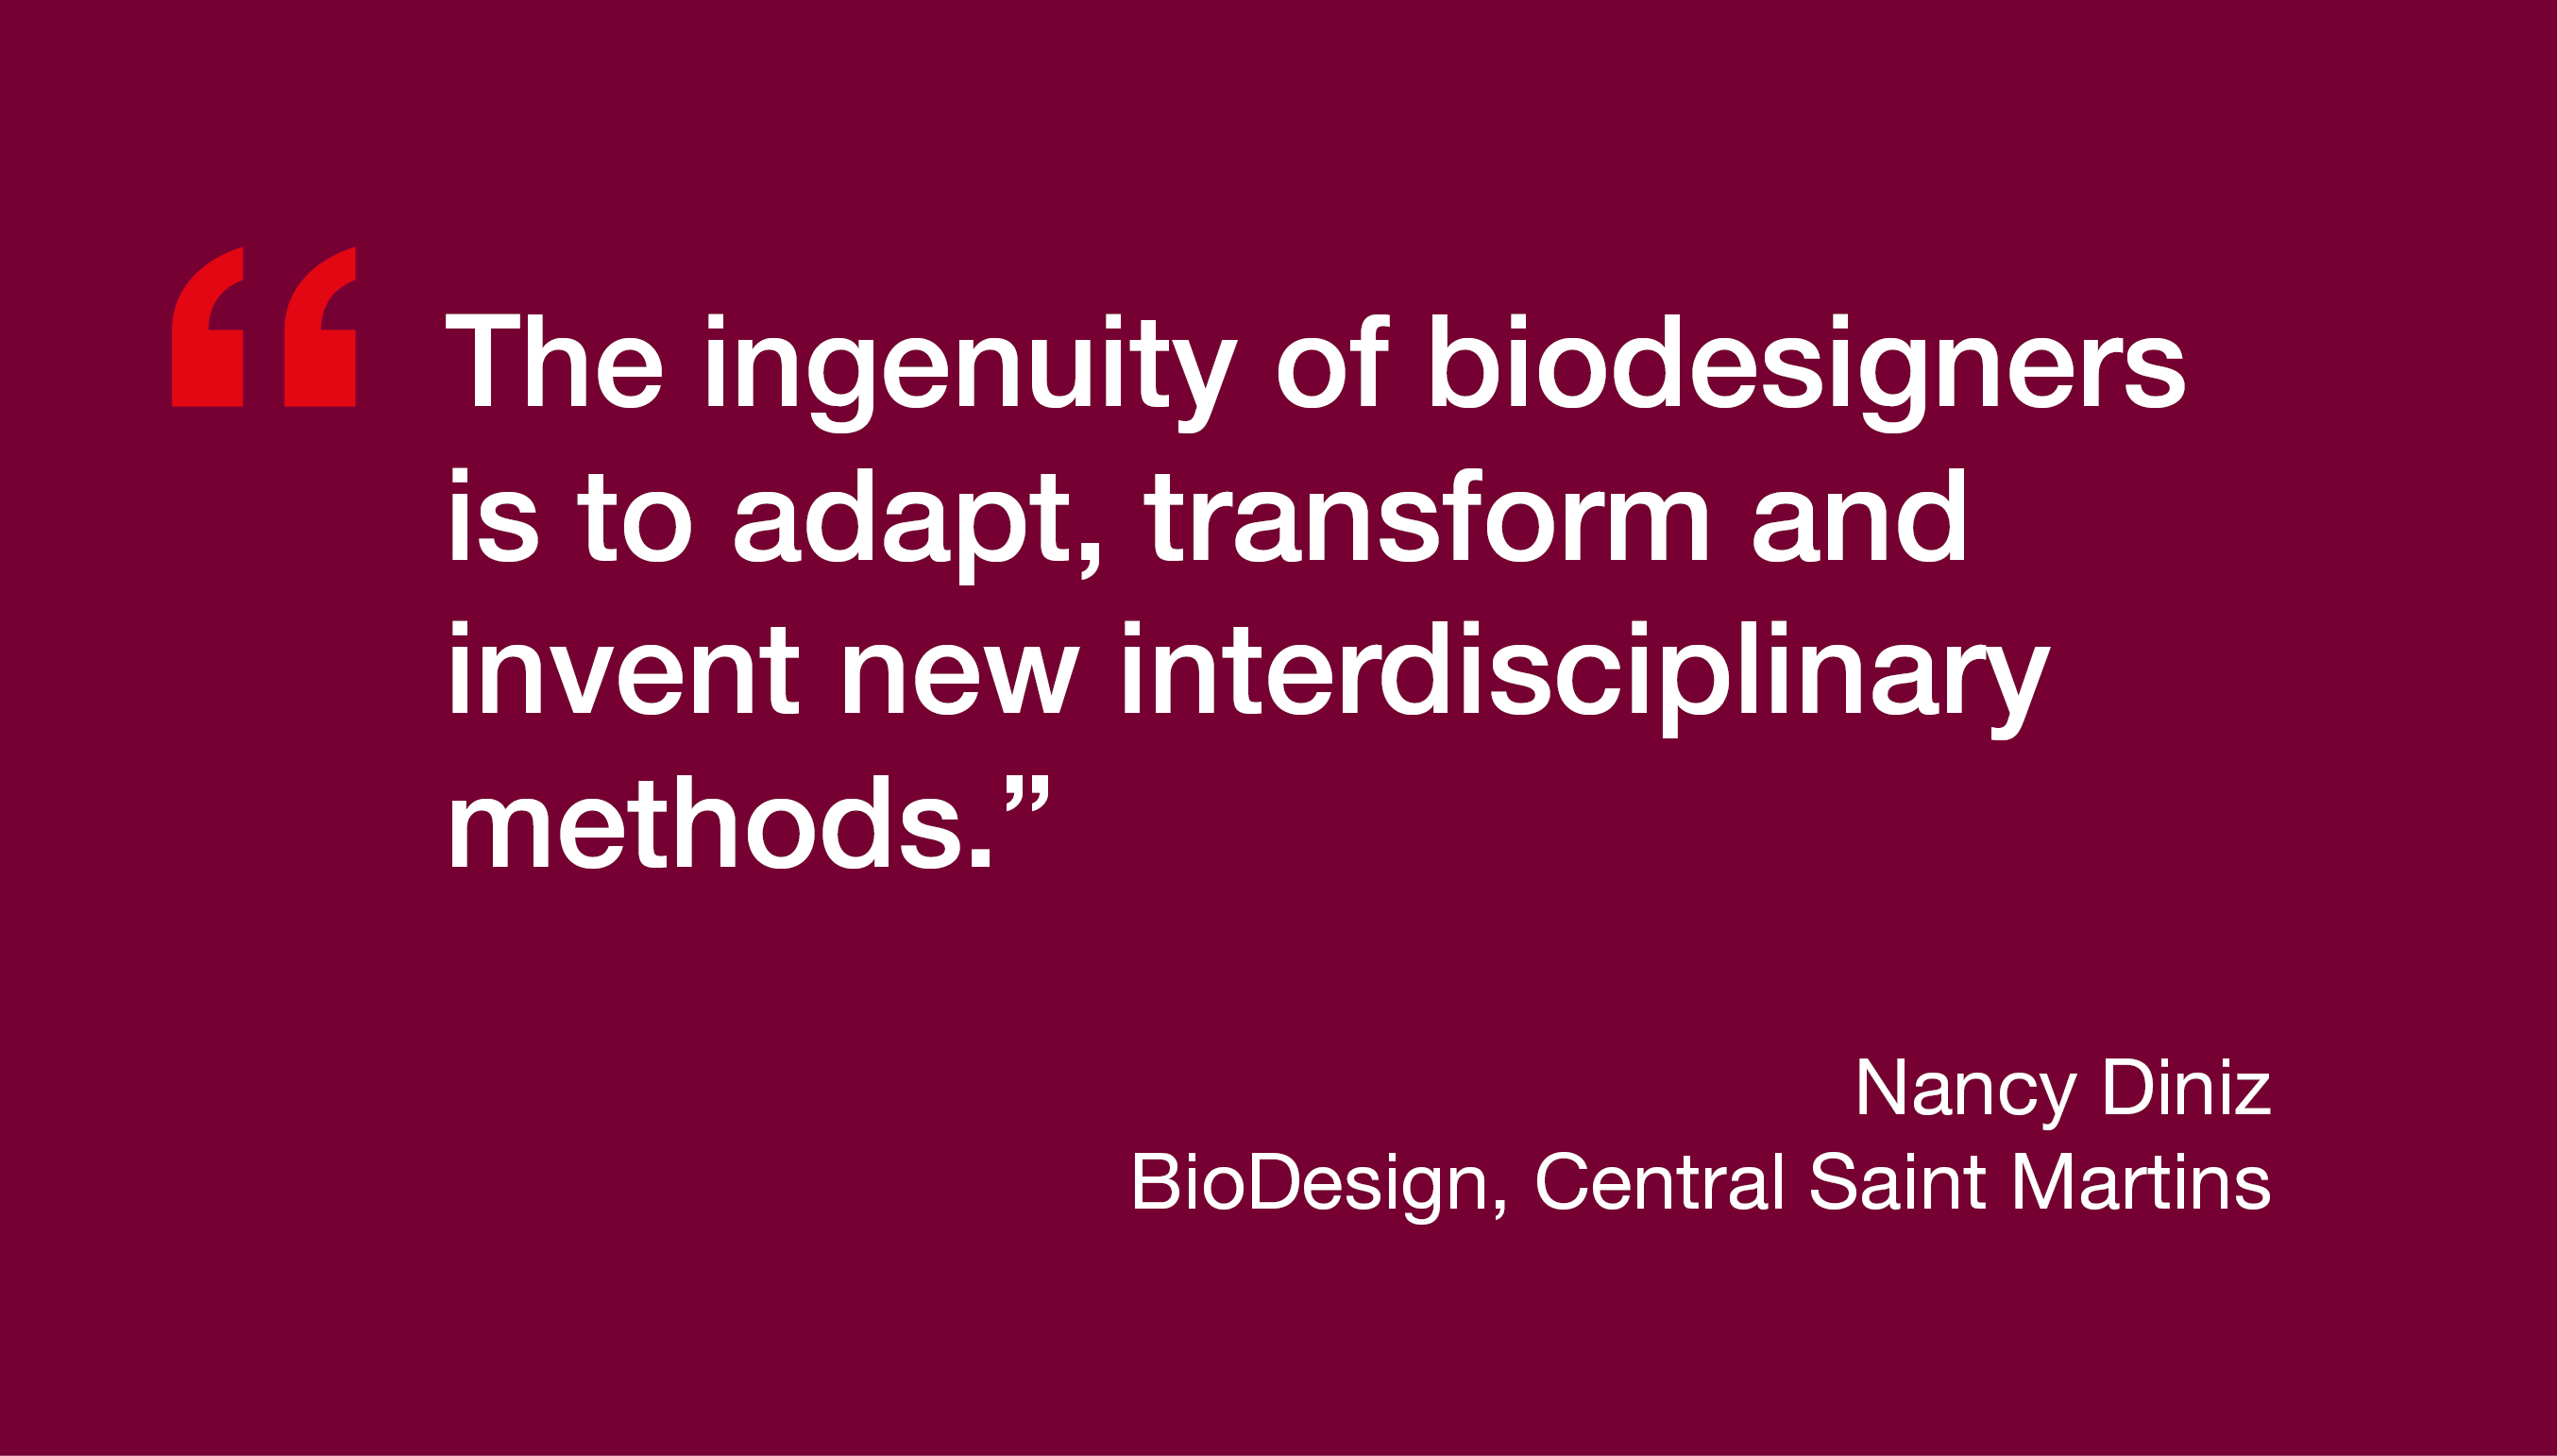 "The ingenuity of biodesigners is to adapt, transform and invent new interdisciplinary methods." Nancy Diniz